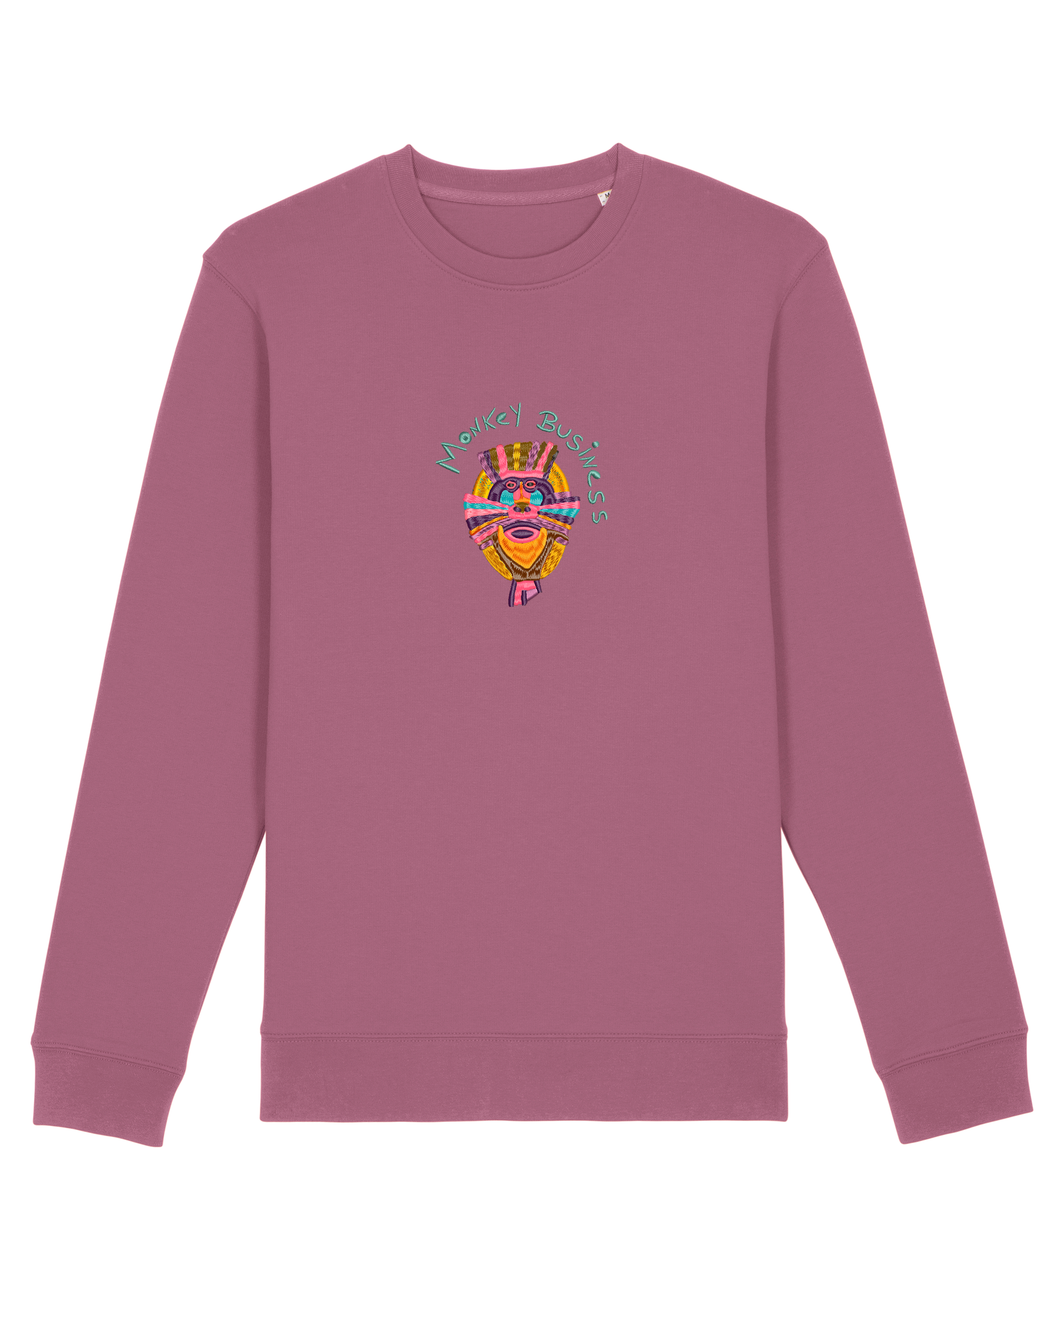 MONKEY BUSINESS 🐵- Embroidered UNISEX CREW NECK Sweatshirt